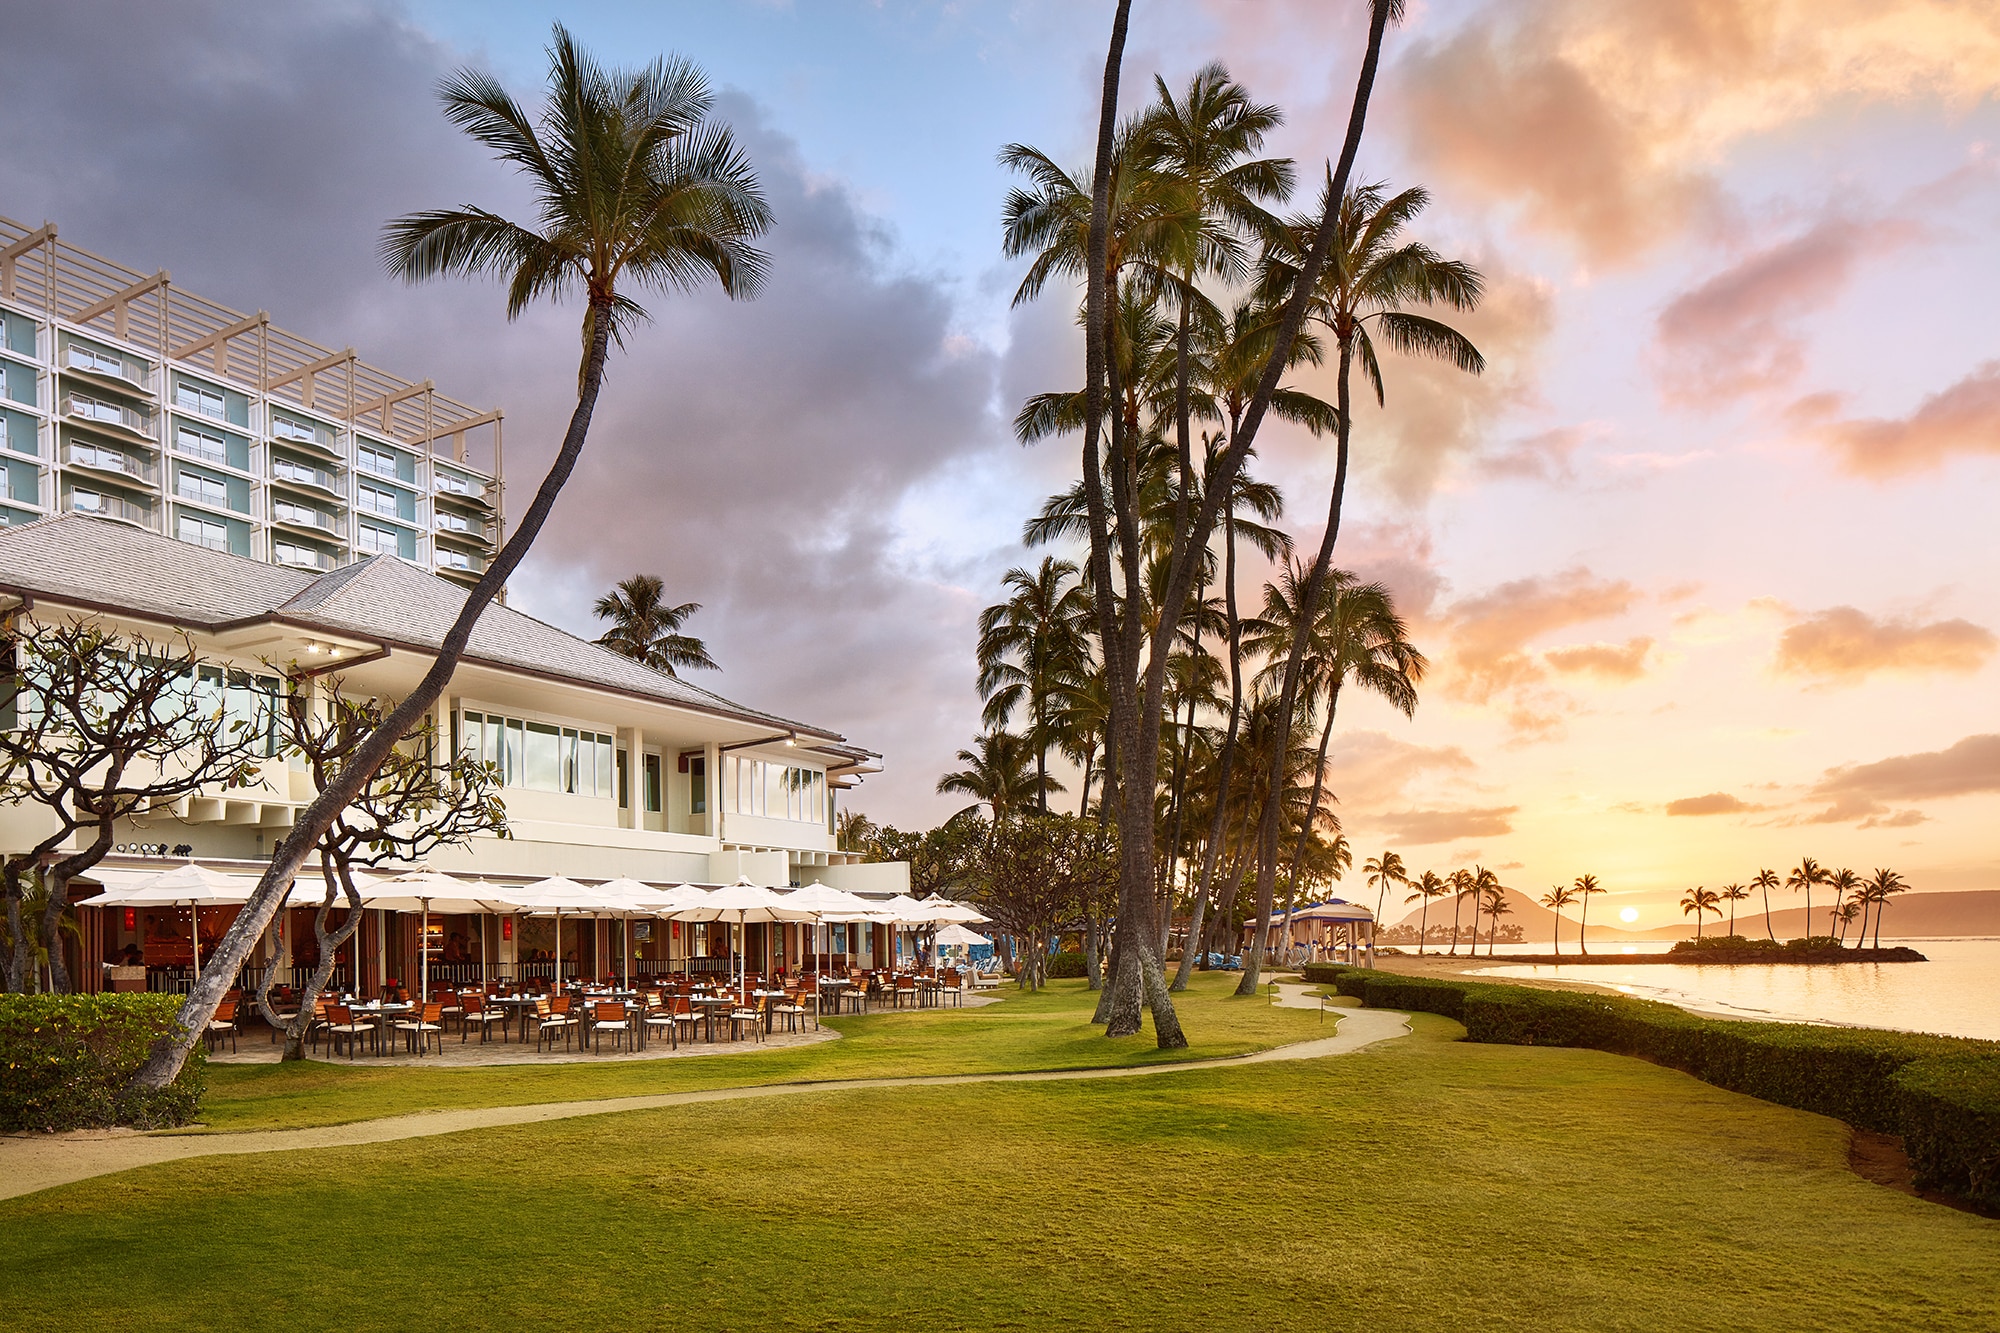 Romantic Oahu Hotels for Couples: The Kahala Hotel & Resort